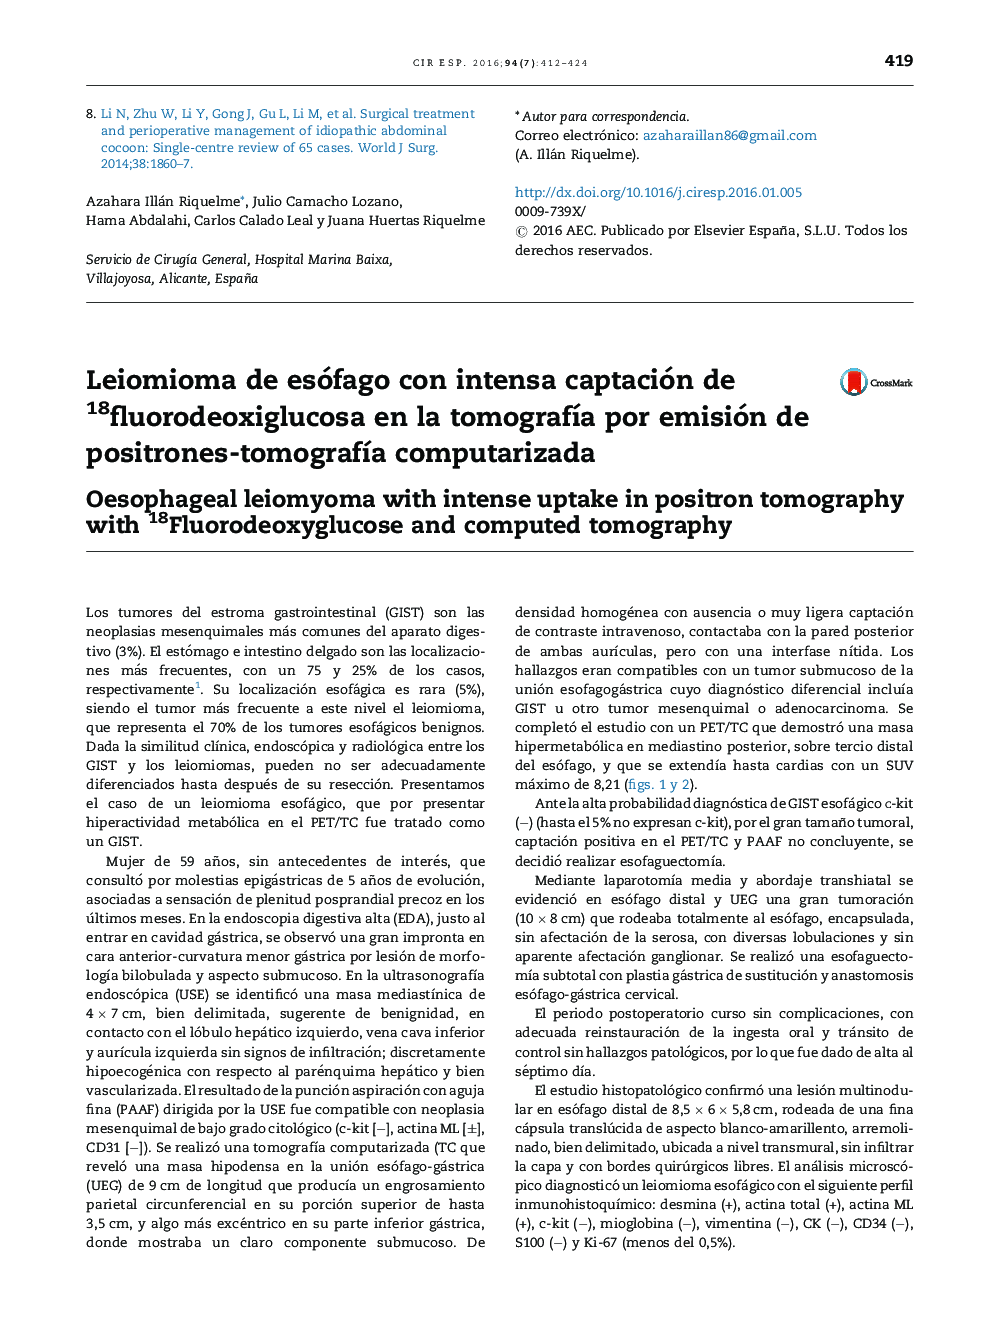 Leiomioma de esófago con intensa captación de 18fluorodeoxiglucosa en la tomografÃ­a por emisión de positrones-tomografÃ­a computarizada